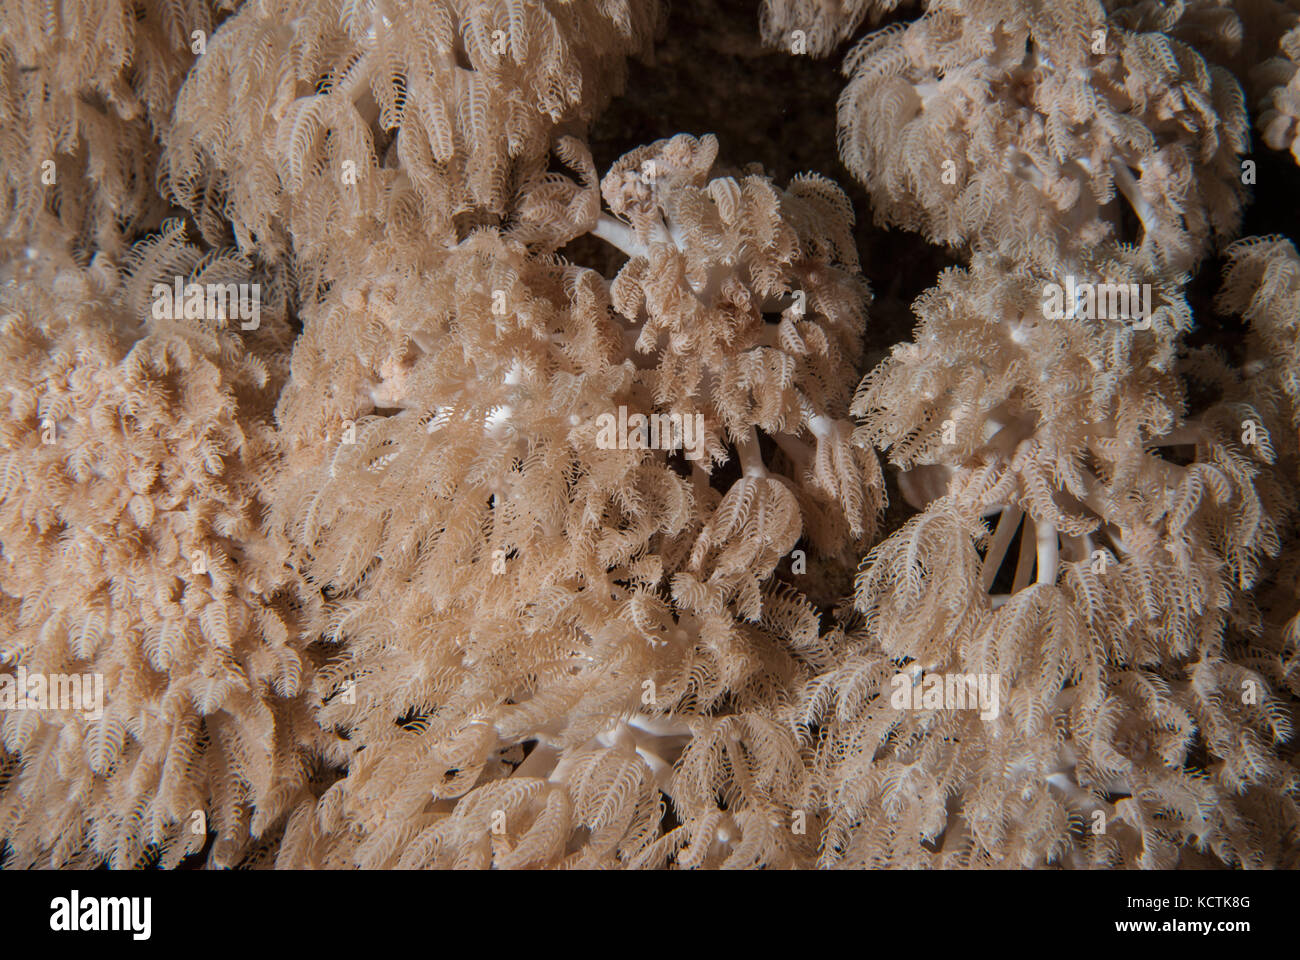 Anthelia sp., Xeriidae, Octocorallia, Alcyonacea, Weichkorallen, Sharm el Sheikh, Rotes Meer, Ägypten Stockfoto